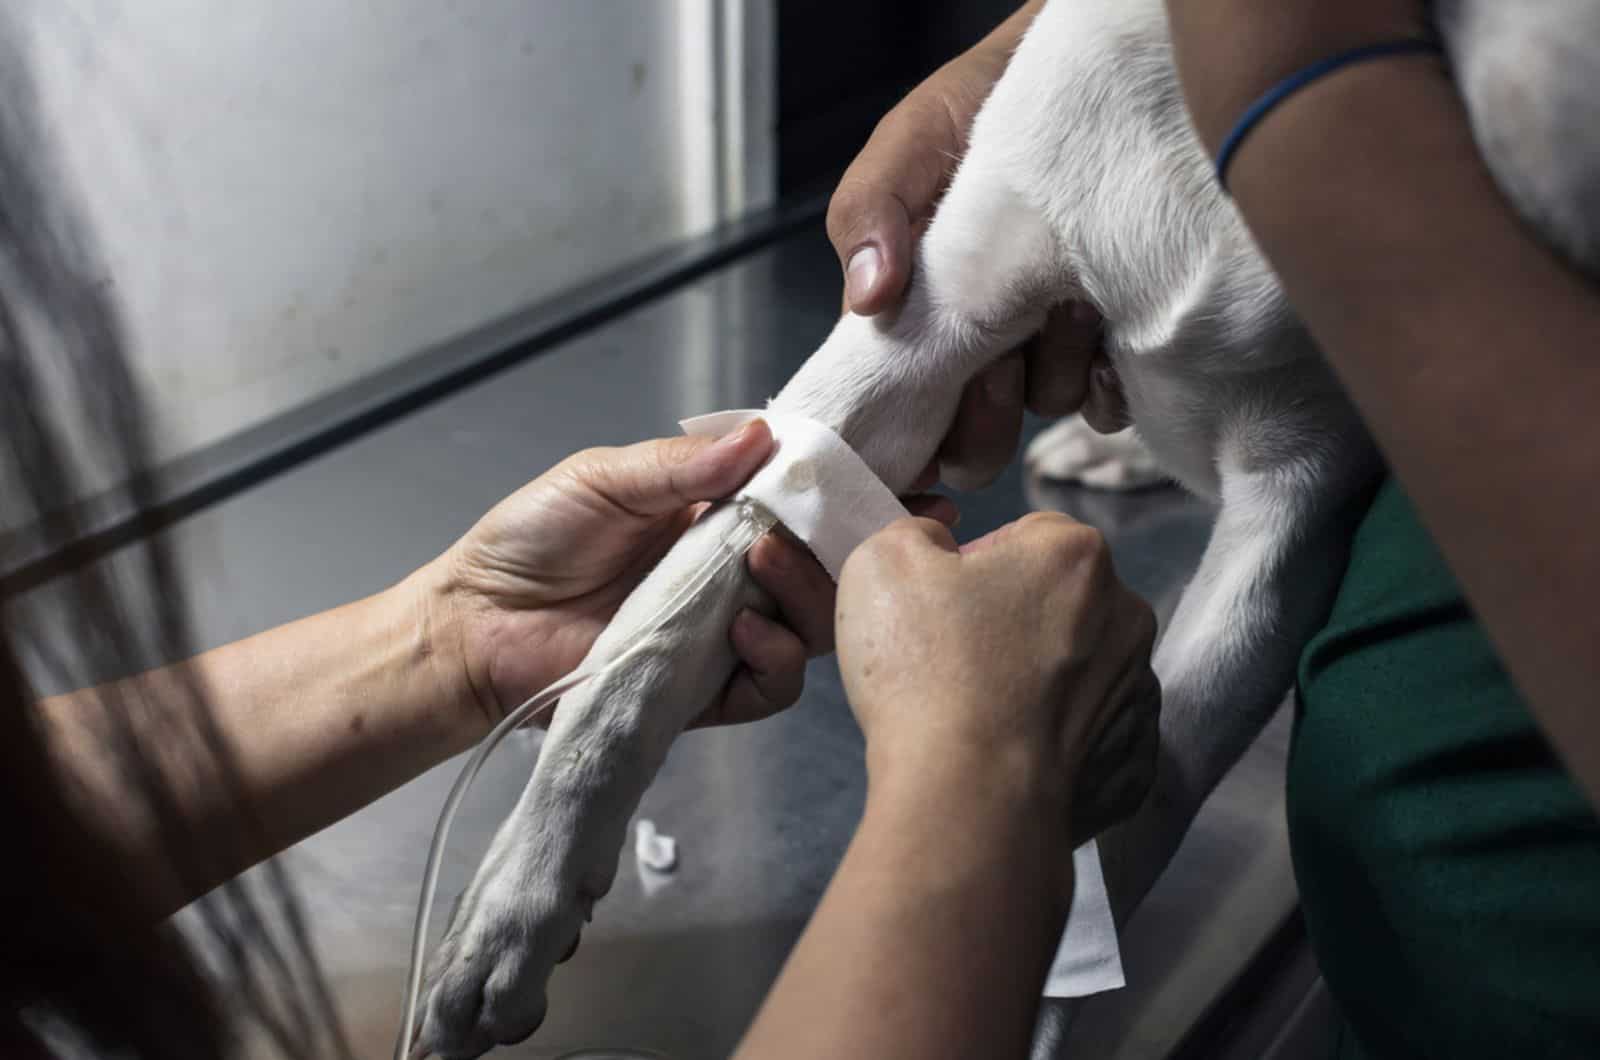 veterinarian secures an IV drip line on a sick dog's leg